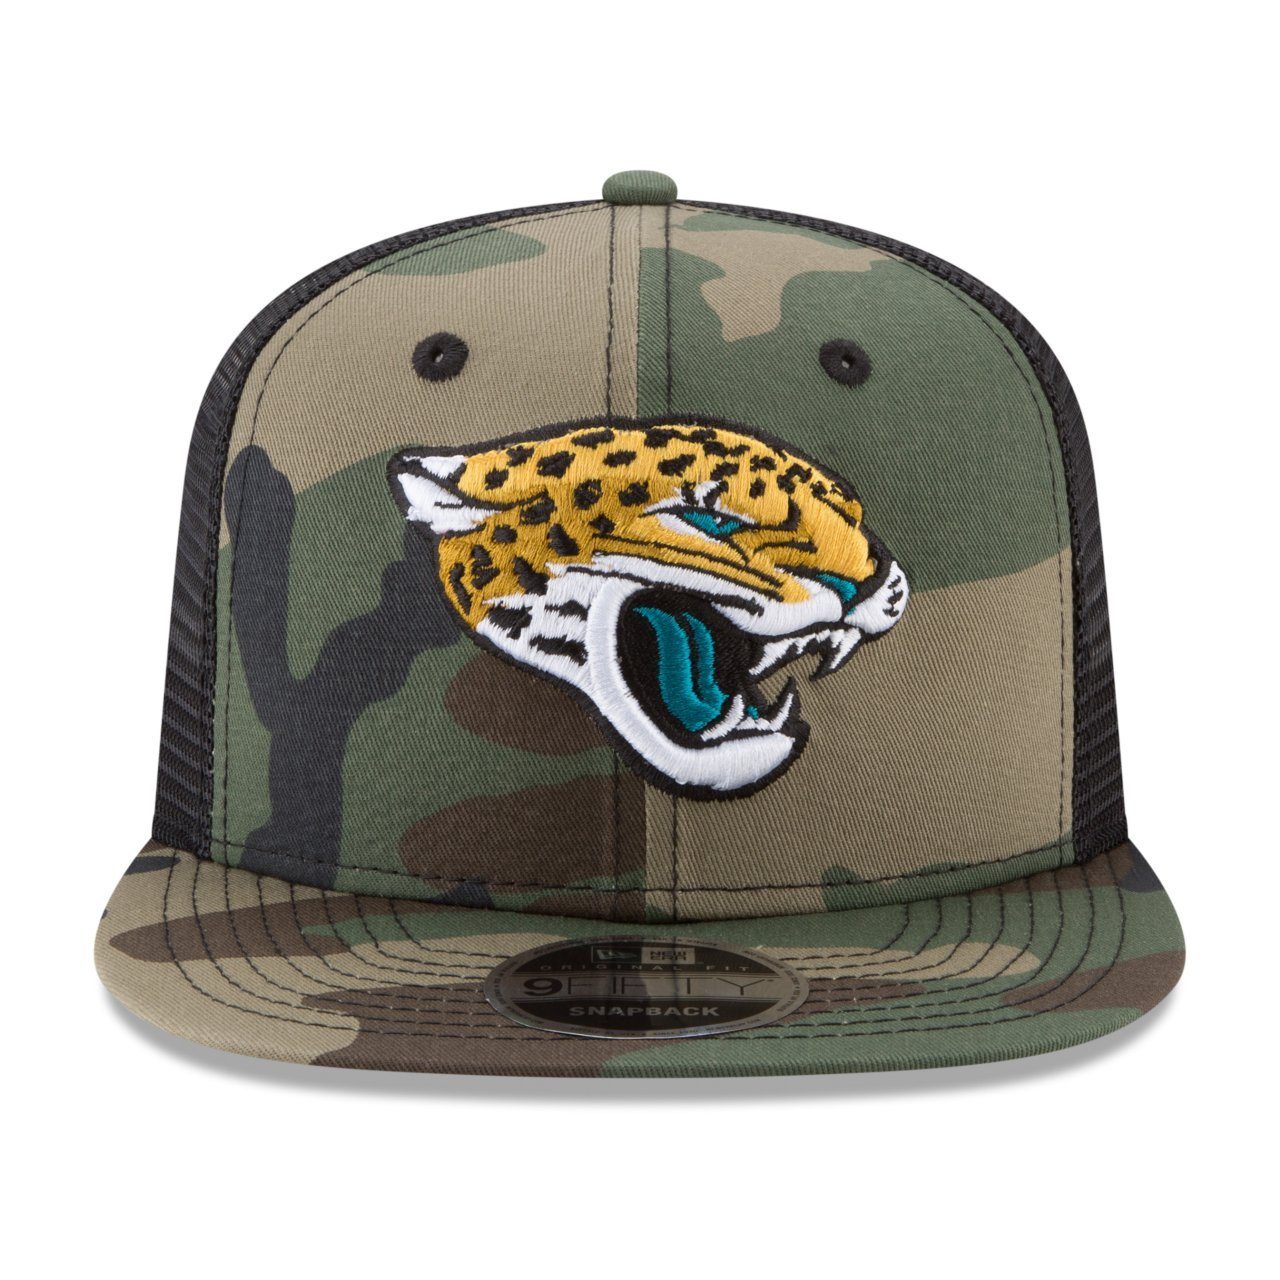 New Era Snapback Jacksonville Jaguars 9Fifty Cap